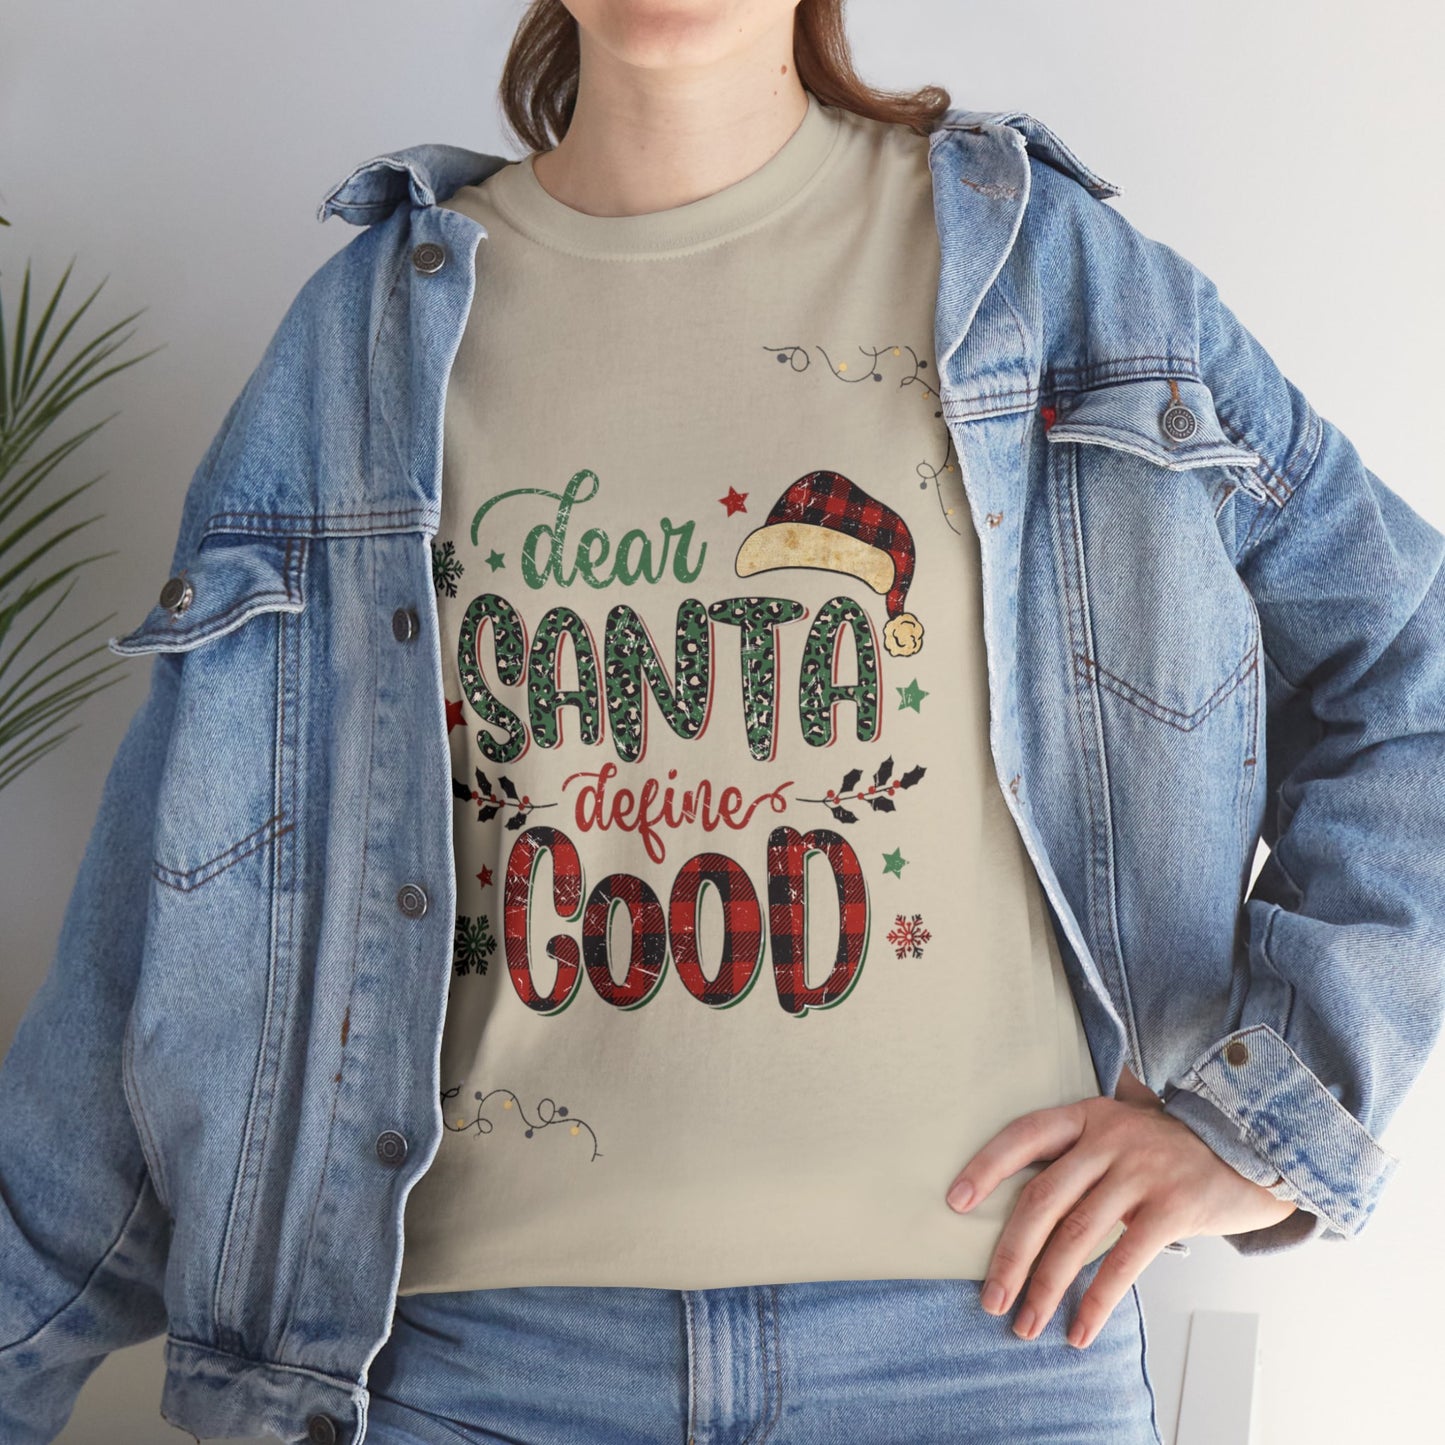 Dear Santa define Good